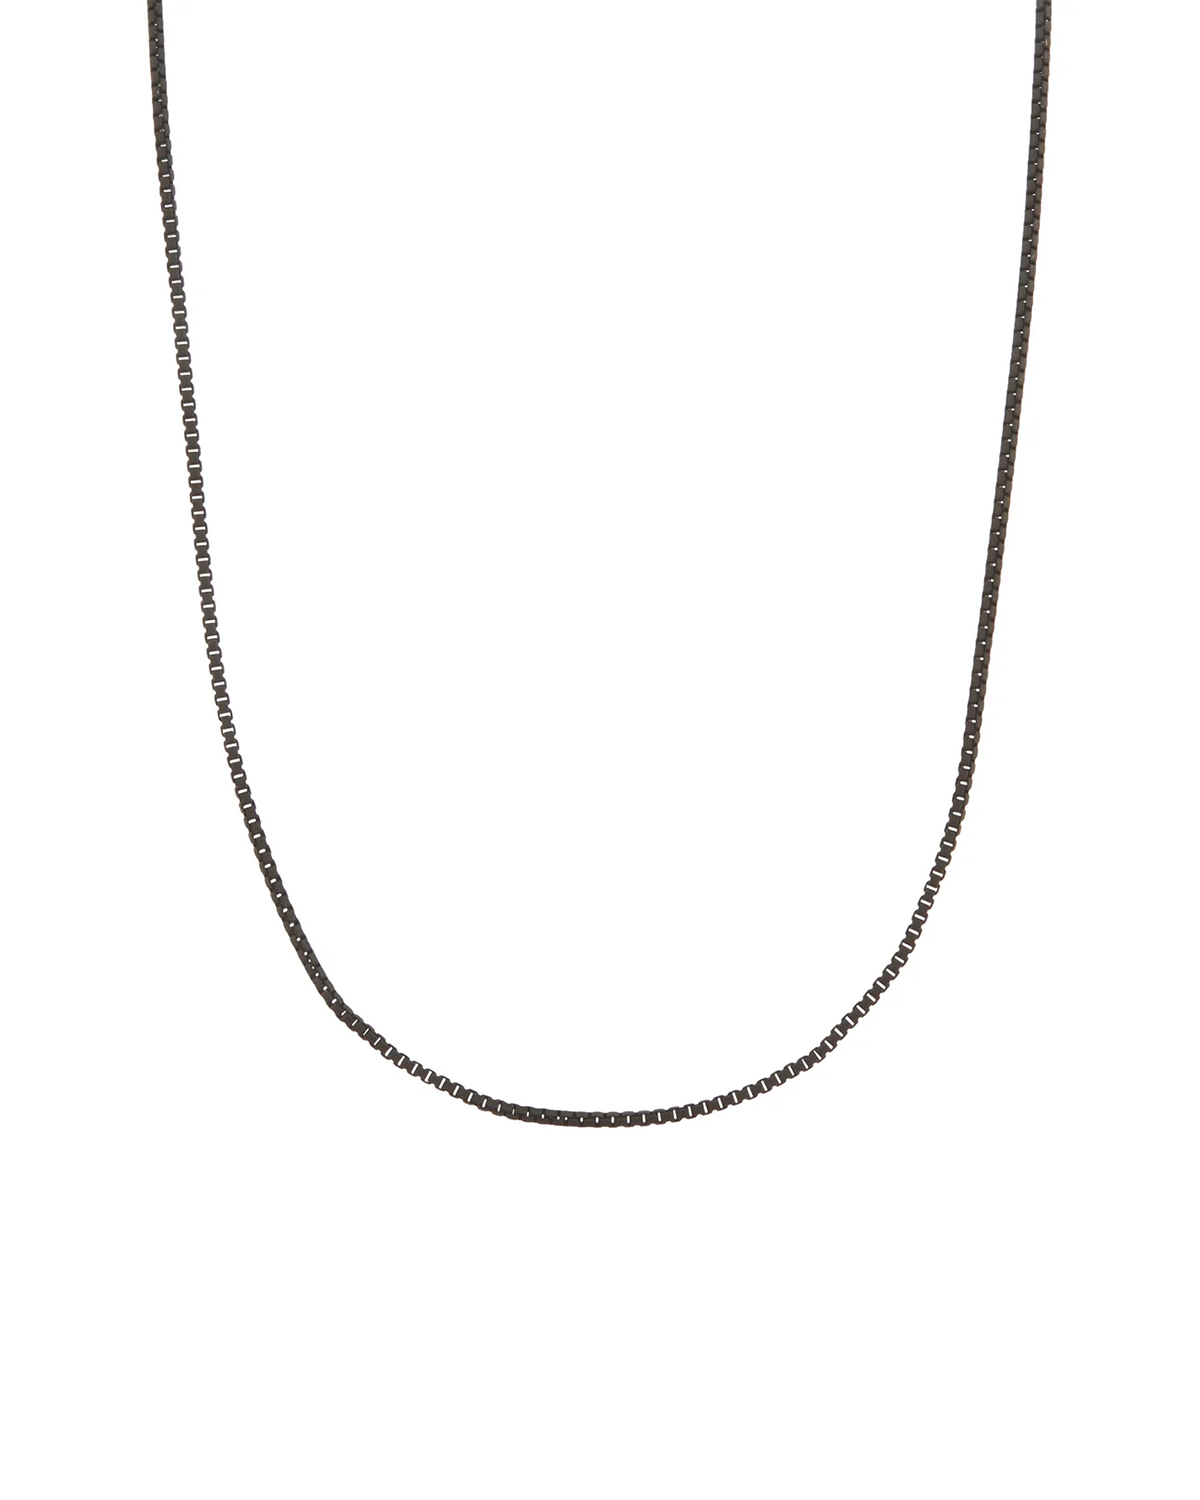 Plastalina Chain 46 cm